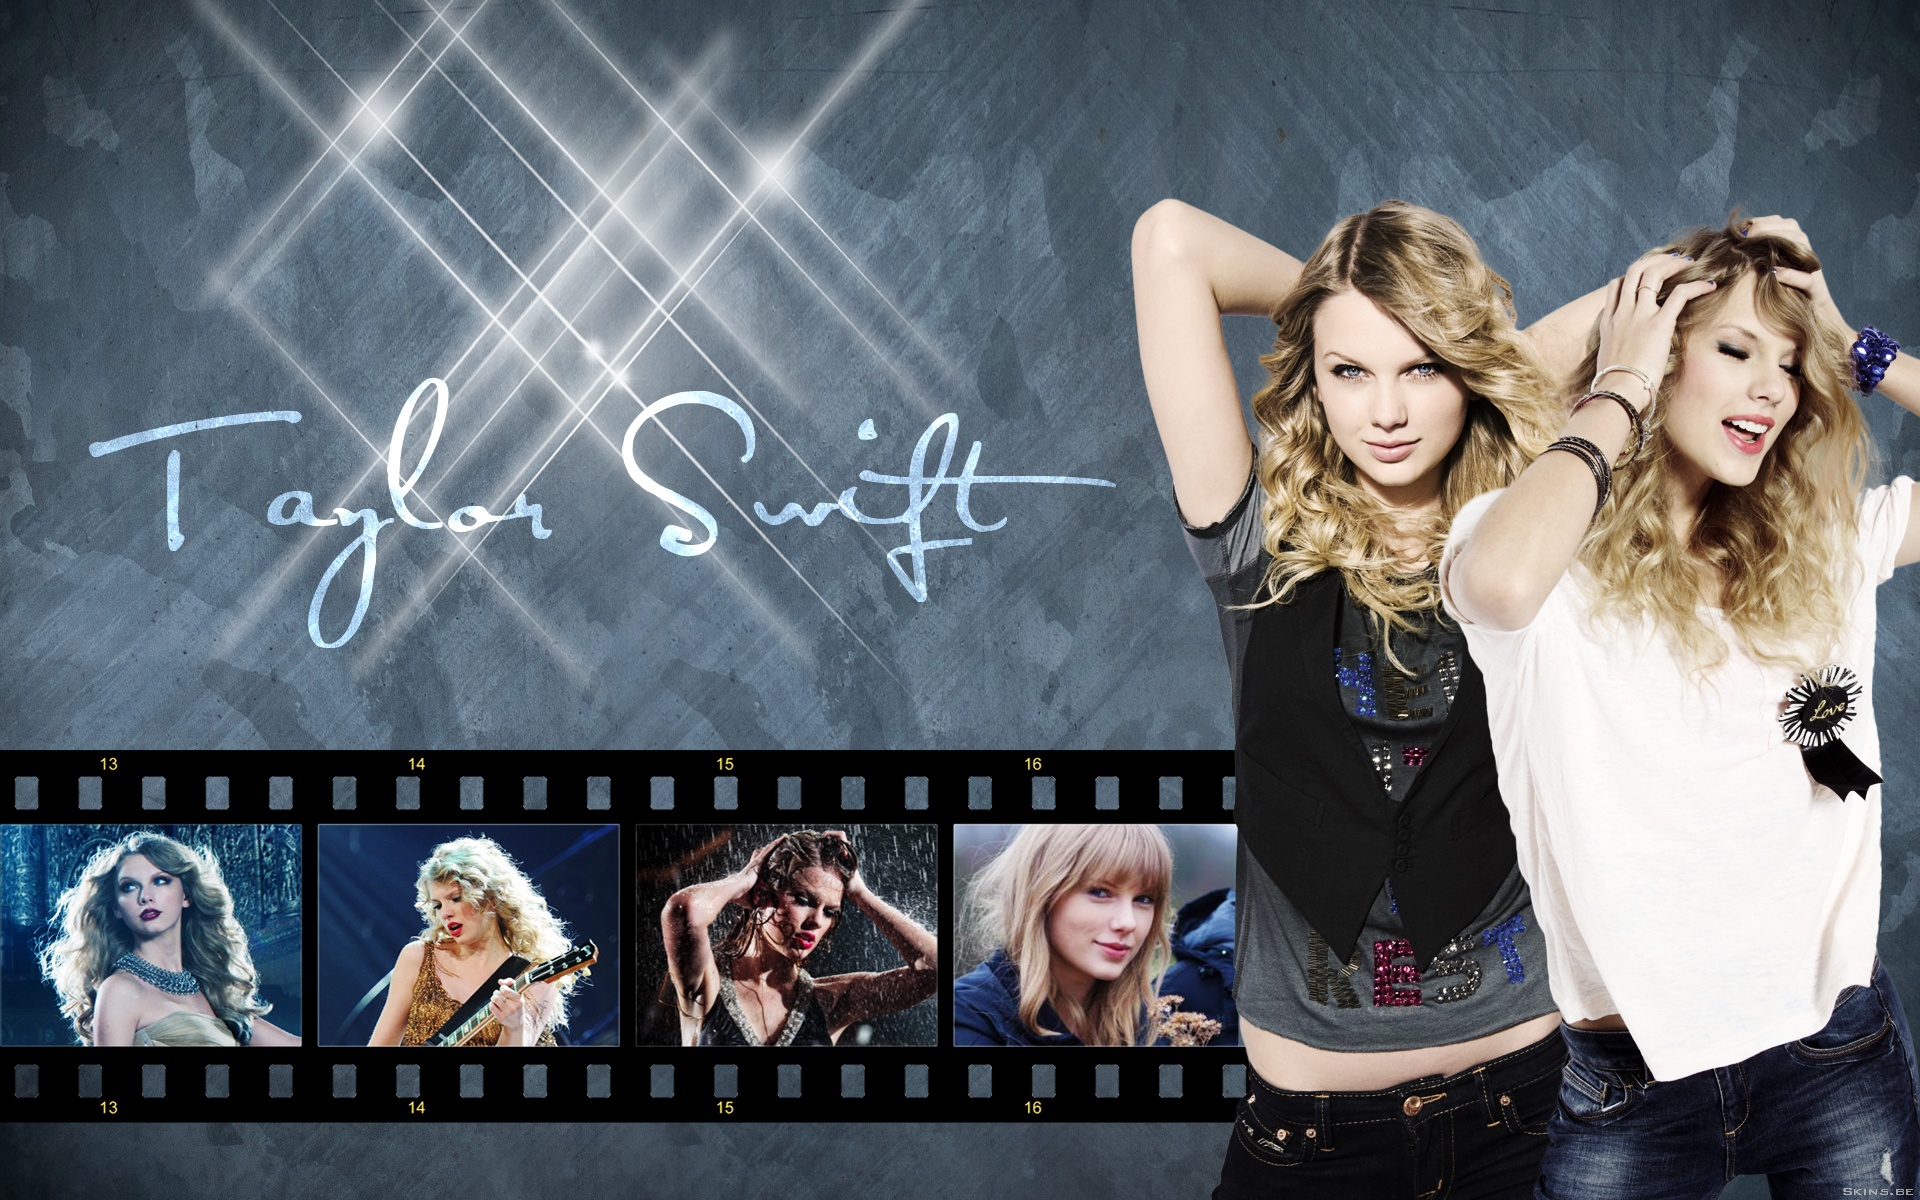 Previous Wallpaper Taylor Swift Next